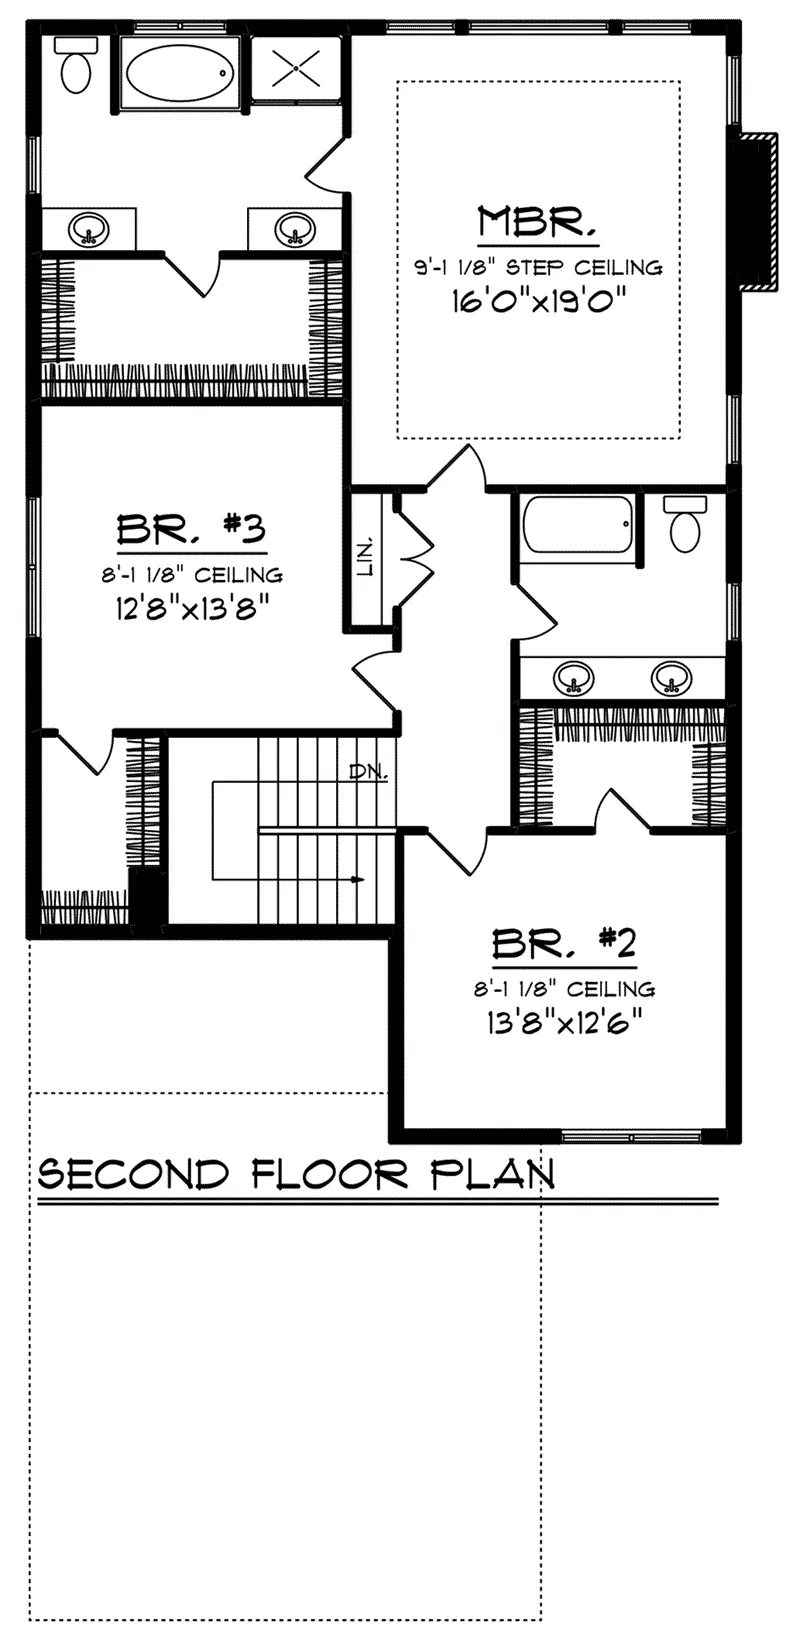 Farmhouse Plan Second Floor - Scotts Creek Craftsman Home 051D-0812 - Shop House Plans and More